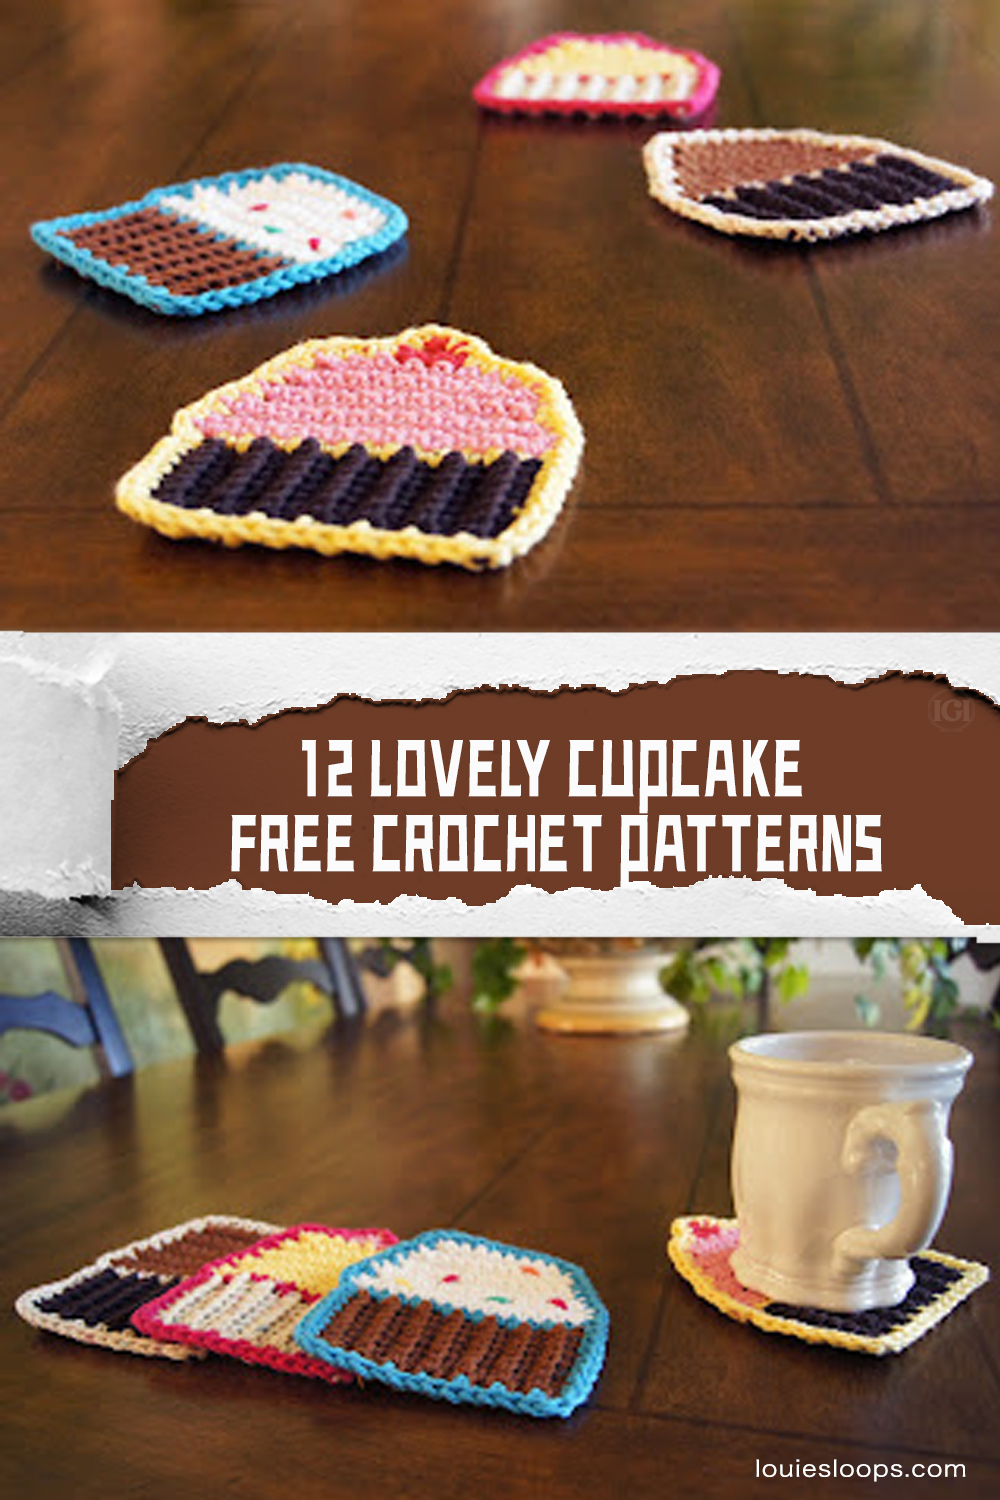 12 Lovely Crochet Cupcake FREE Patterns